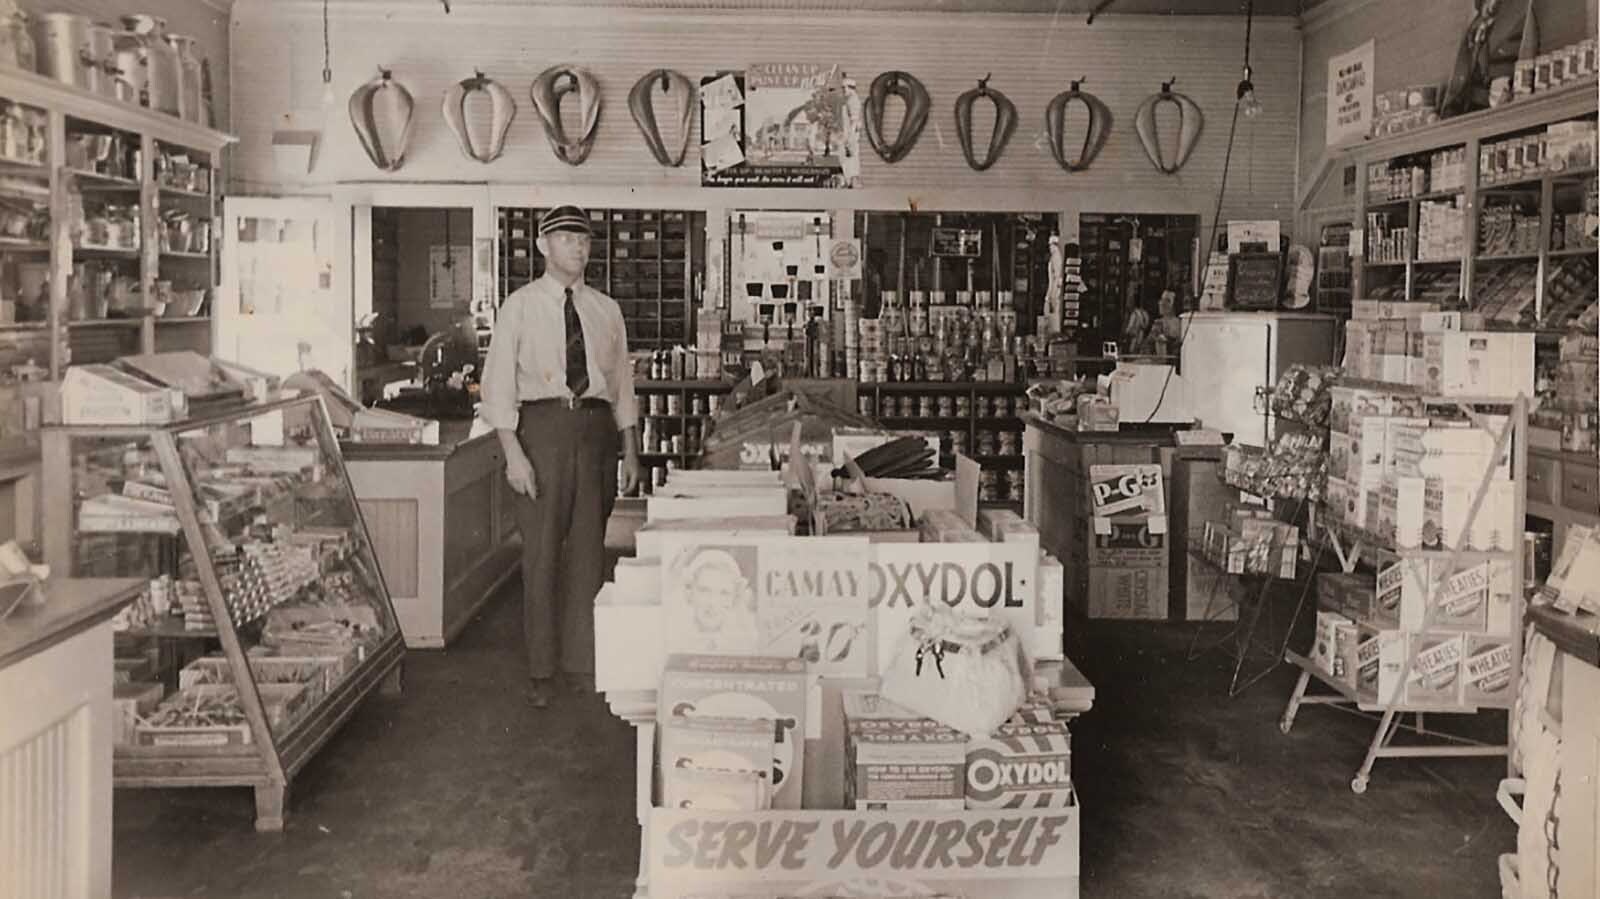 C.W. "Curt" Taubert in his original hardware store in Fort Laramie.